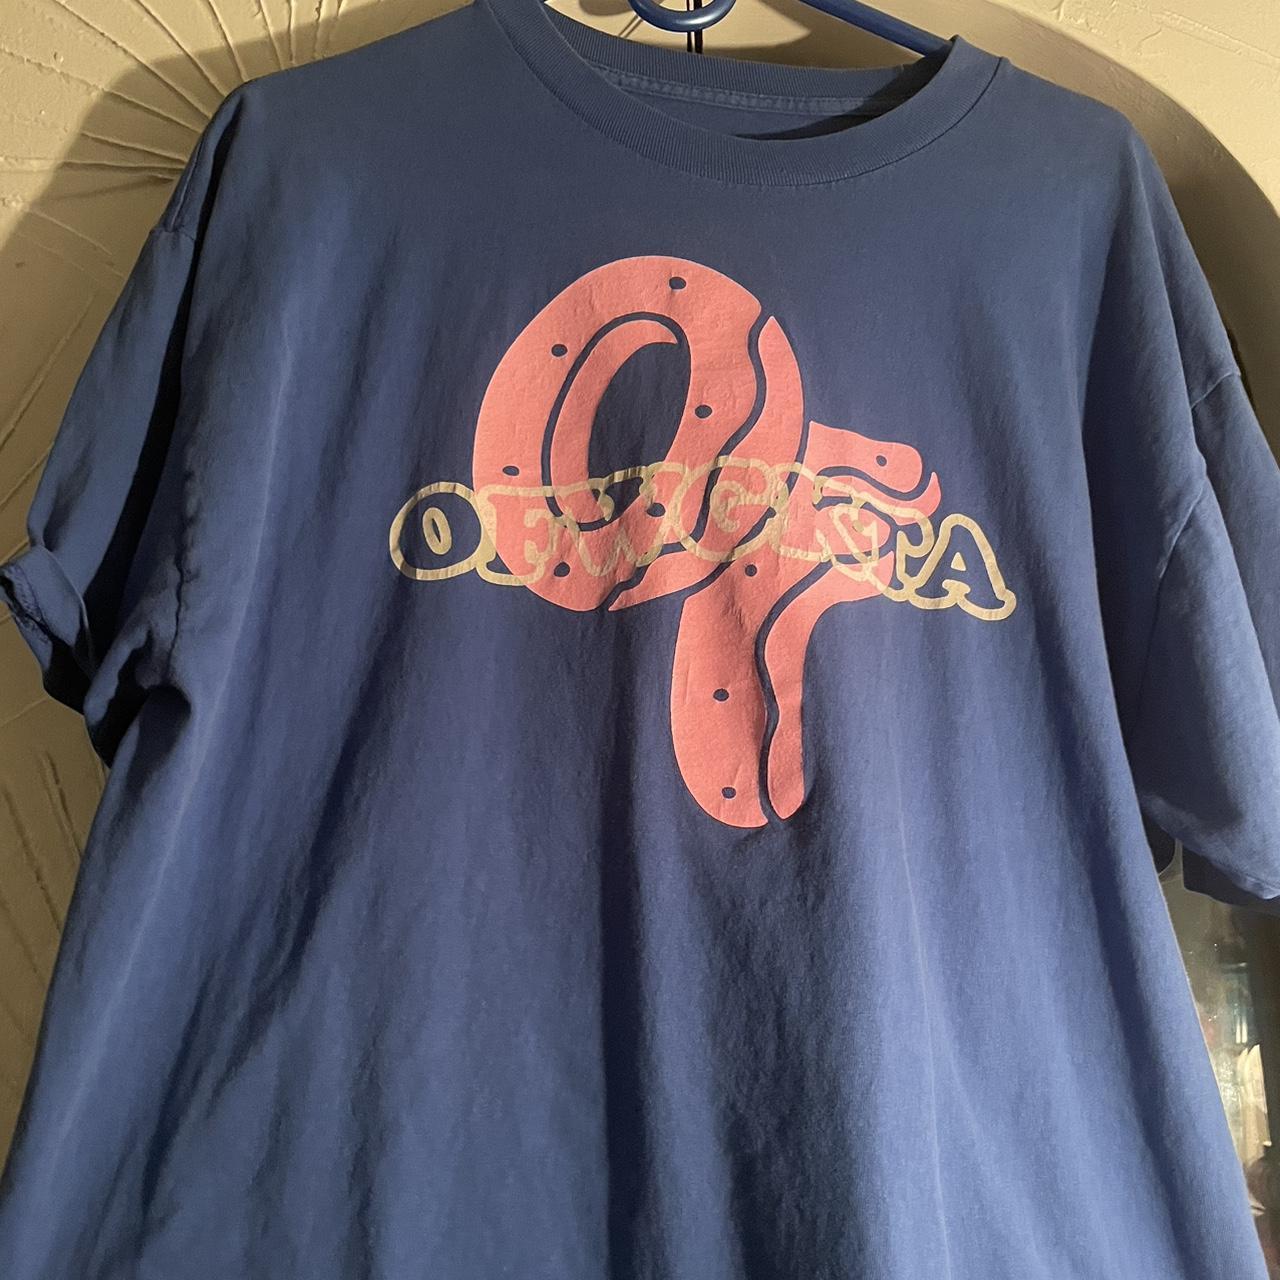 Odd Future T-Shirt Size : XL #ofwgkta #ofwg #mens... - Depop